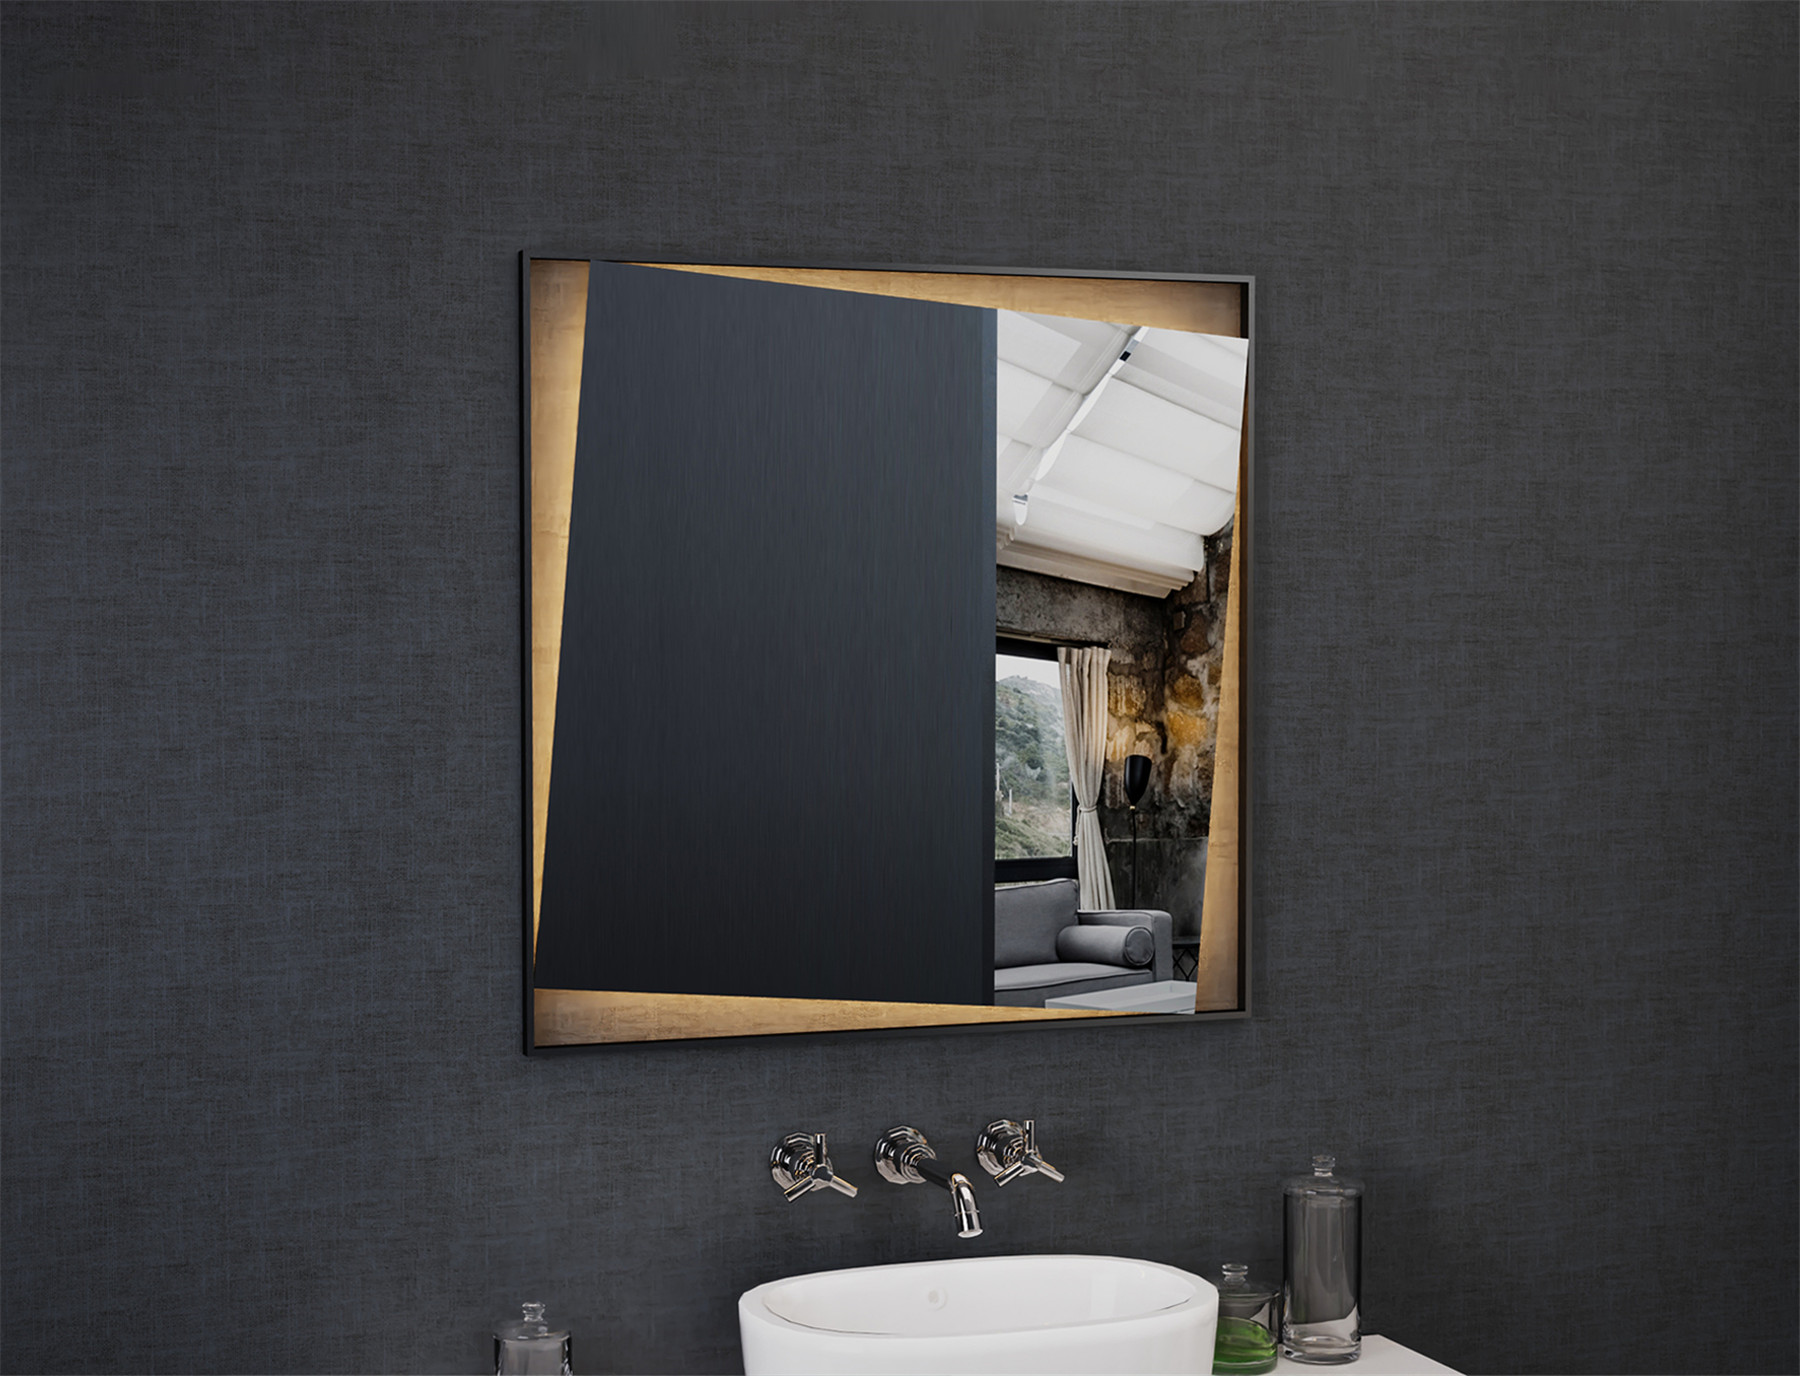 Should I Have a Square LED Bathroom Mirror?